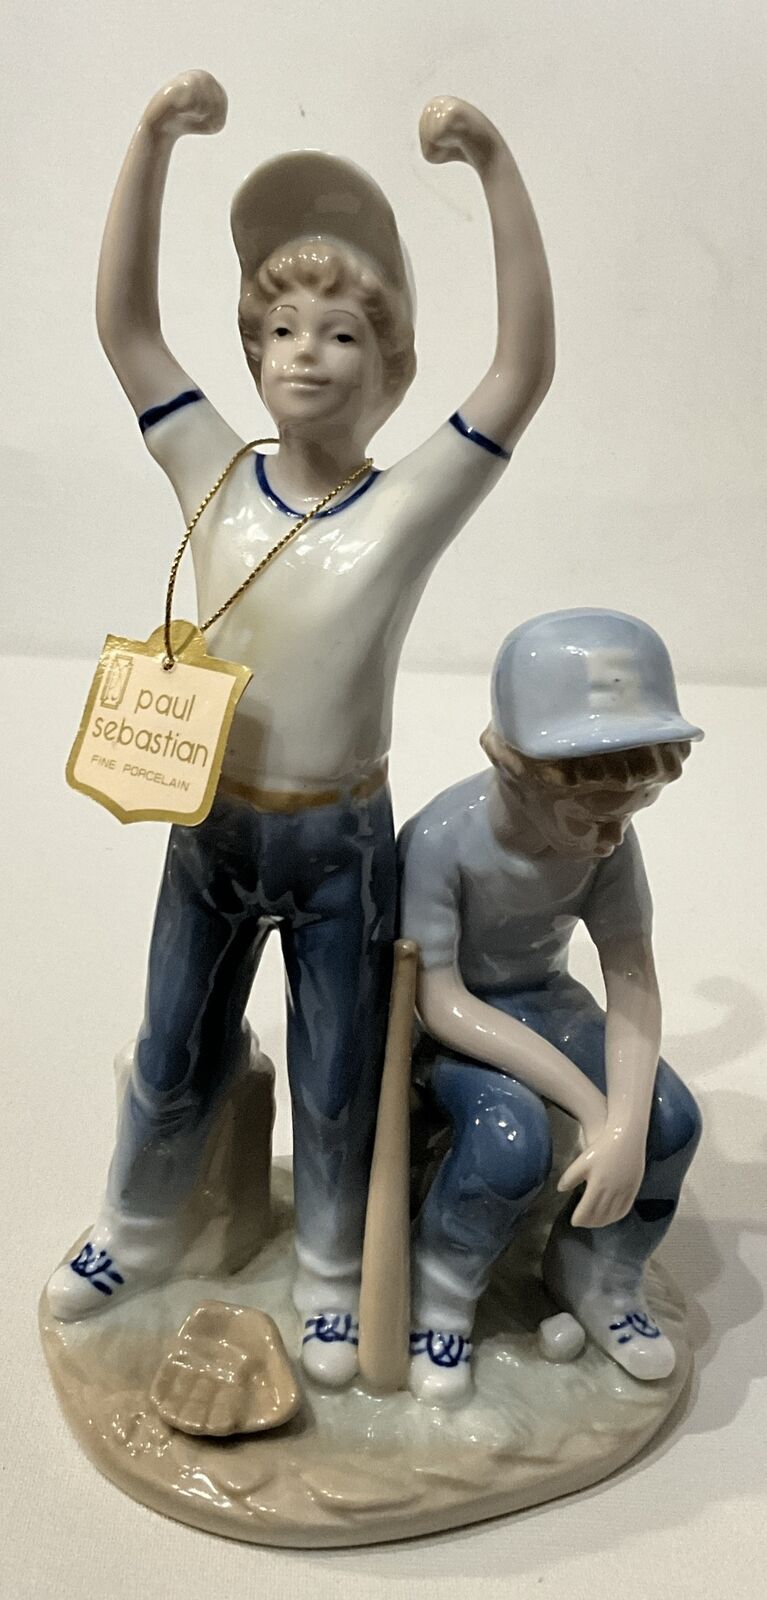 1989 Paul Sebastian Figurine Home Run Baseball Happy Winner And Loser Statue 9”